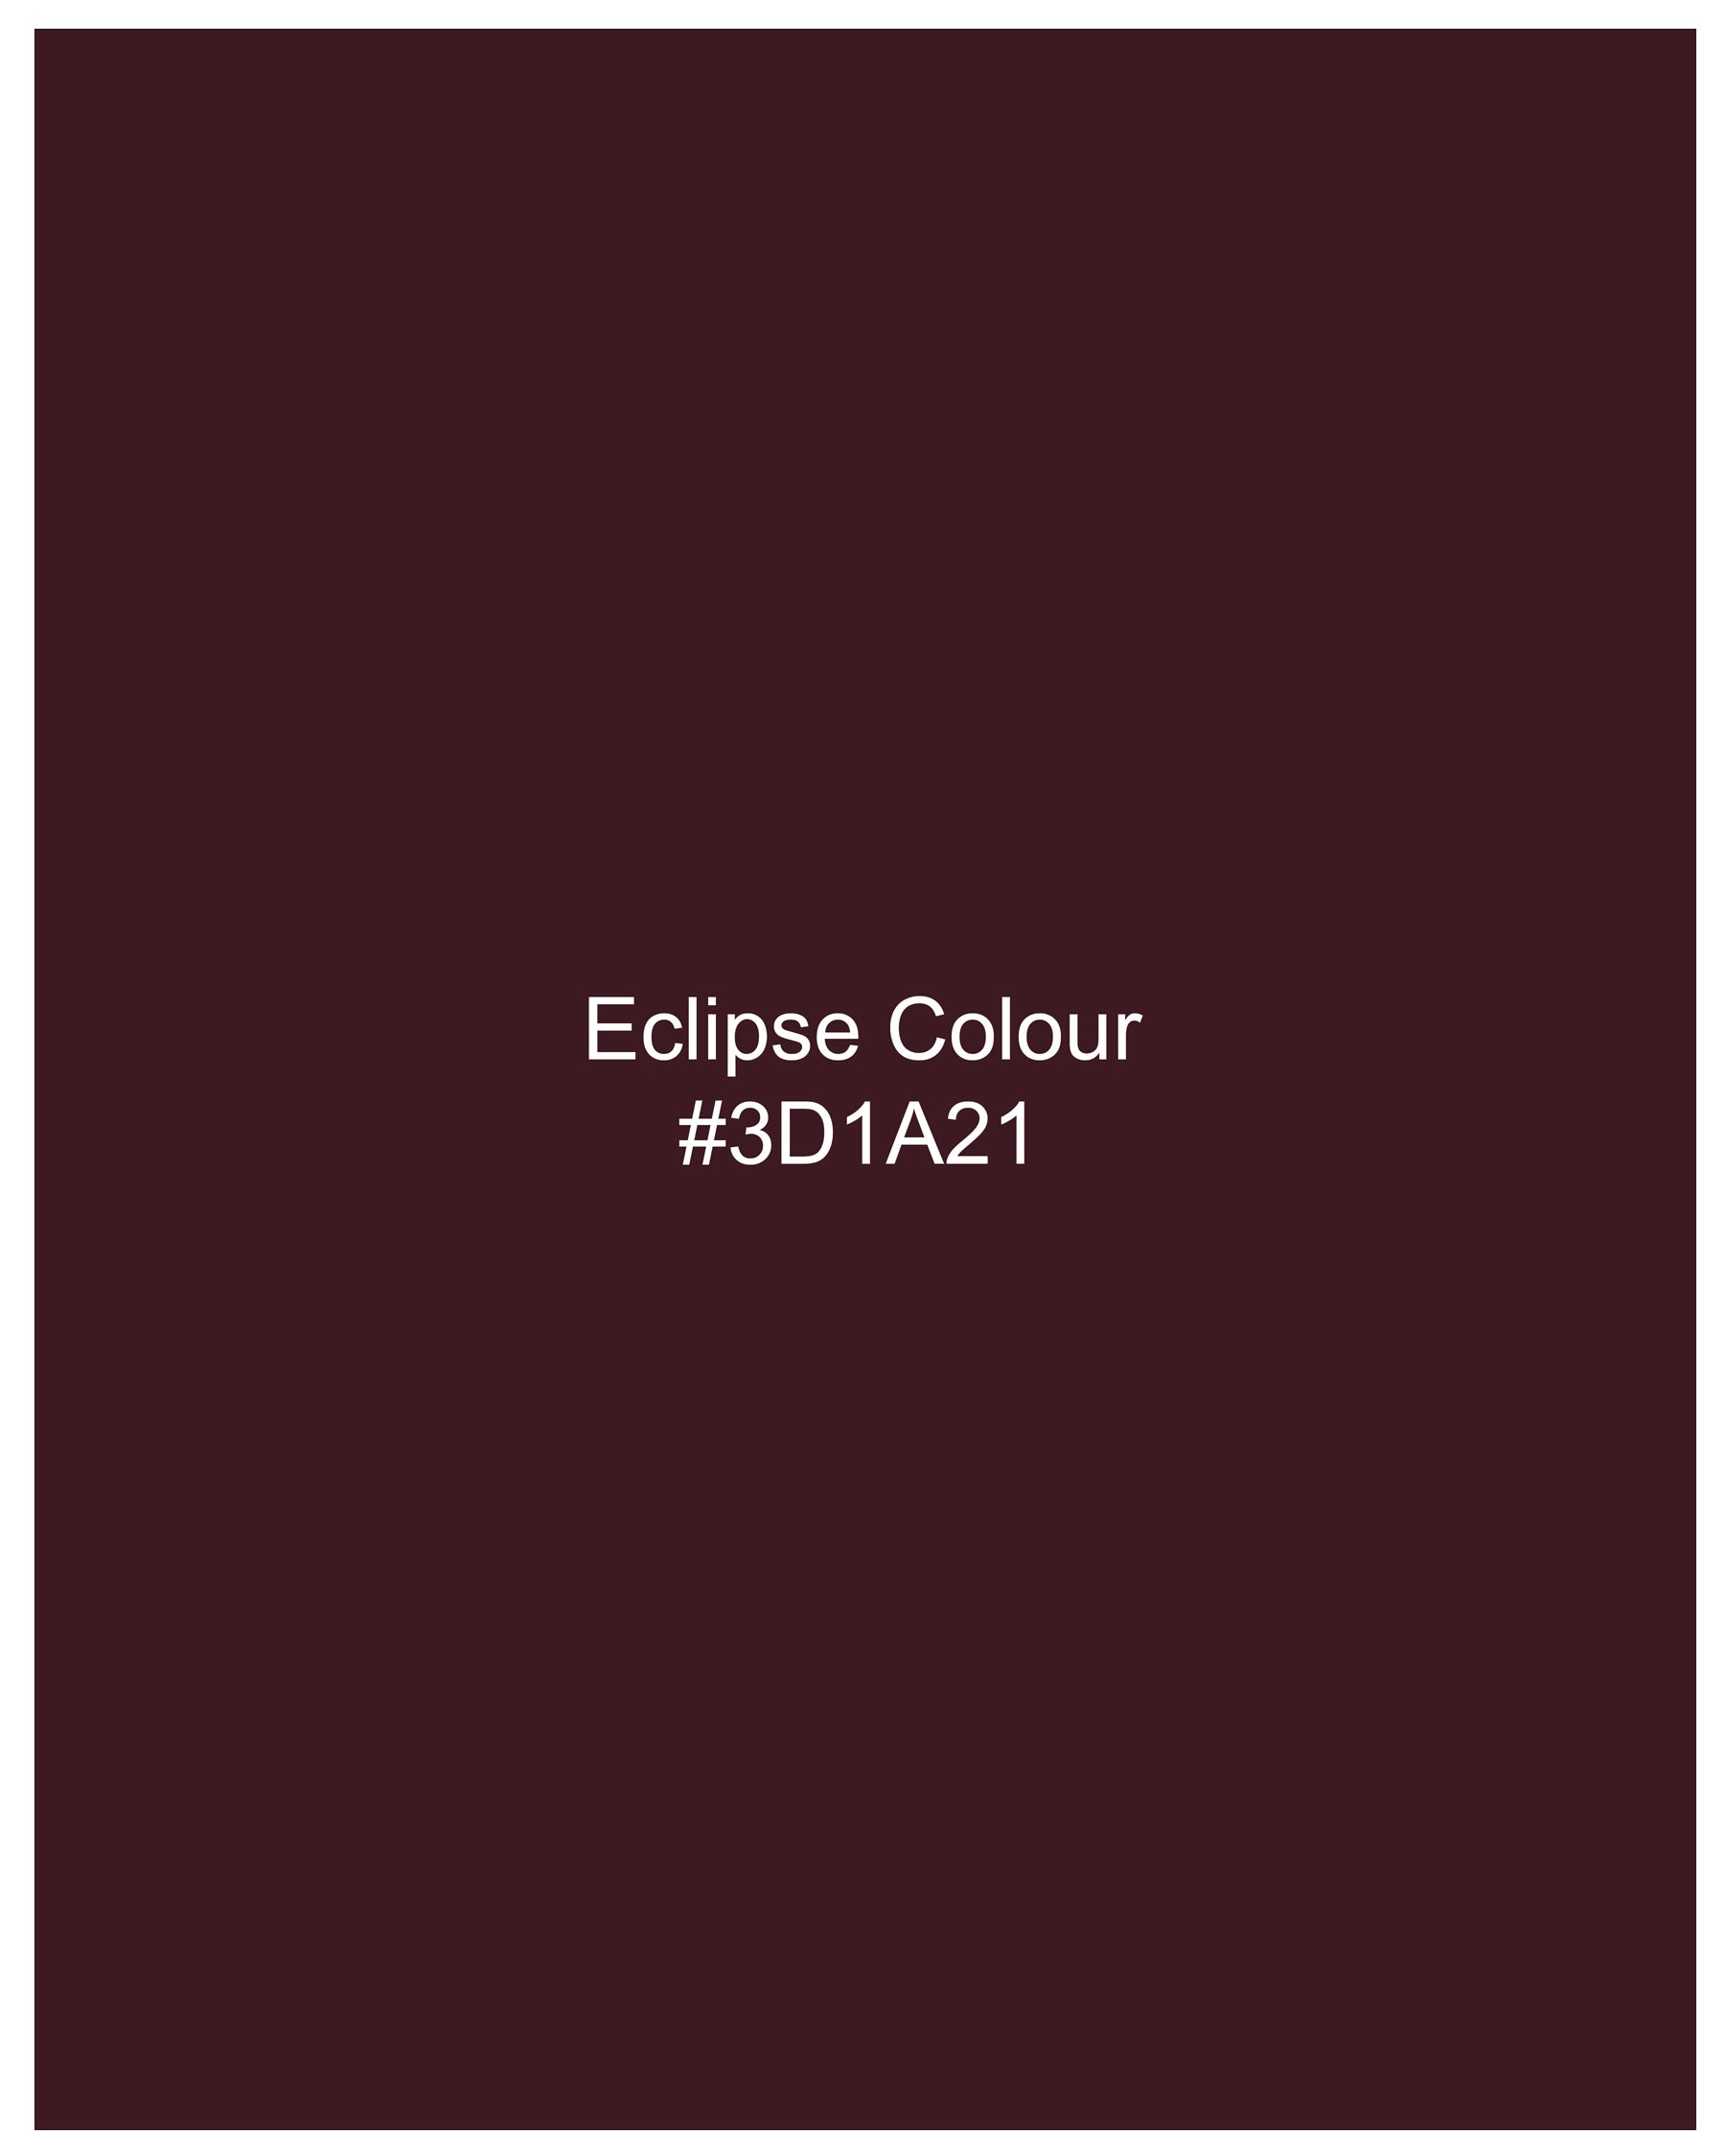 Eclipse Maroon Premium Cotton T-Shirt WTP041-32, WTP041-34, WTP041-36, WTP041-38, WTP041-40, WTP041-42